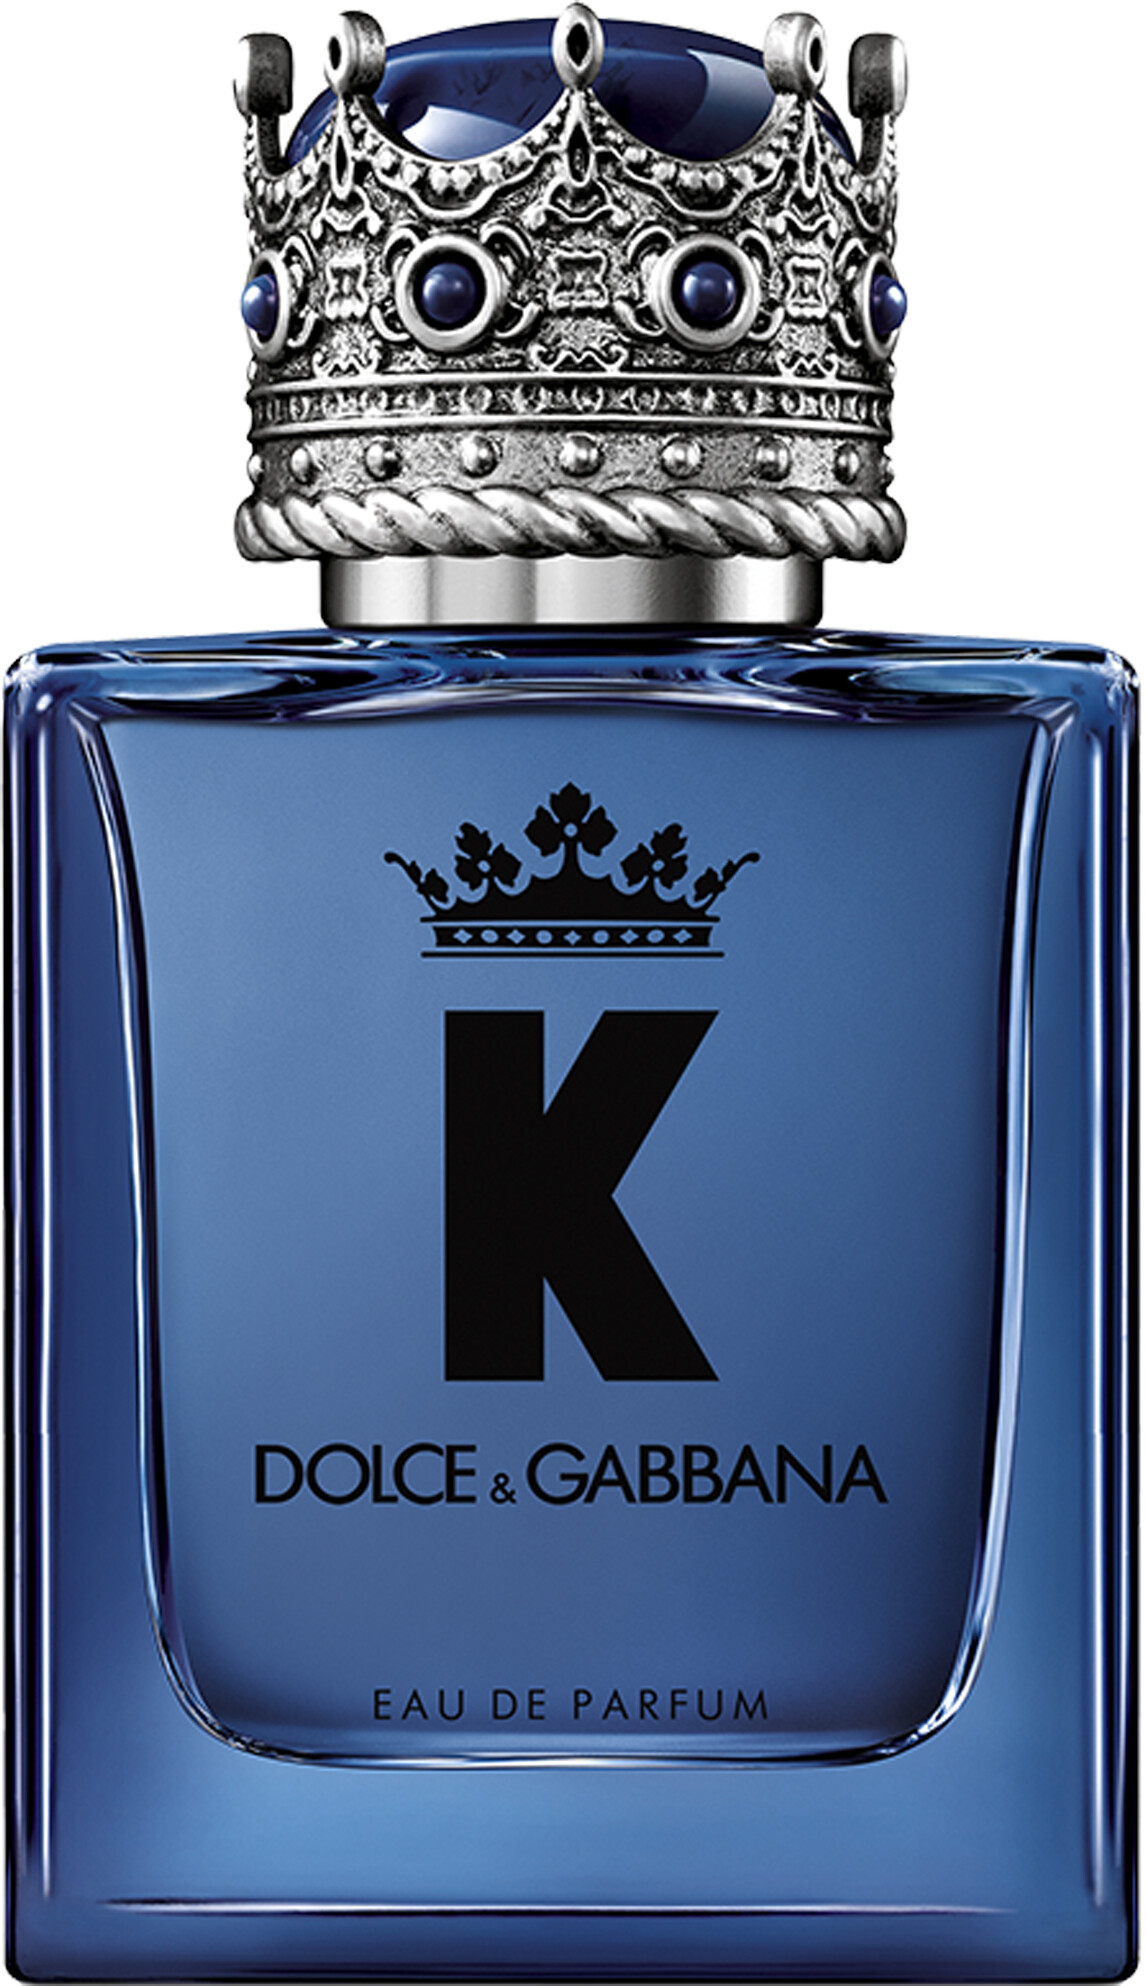 Dolce & Gabbana K By Dolce&Gabbana Eau de Parfum Spray 50ml